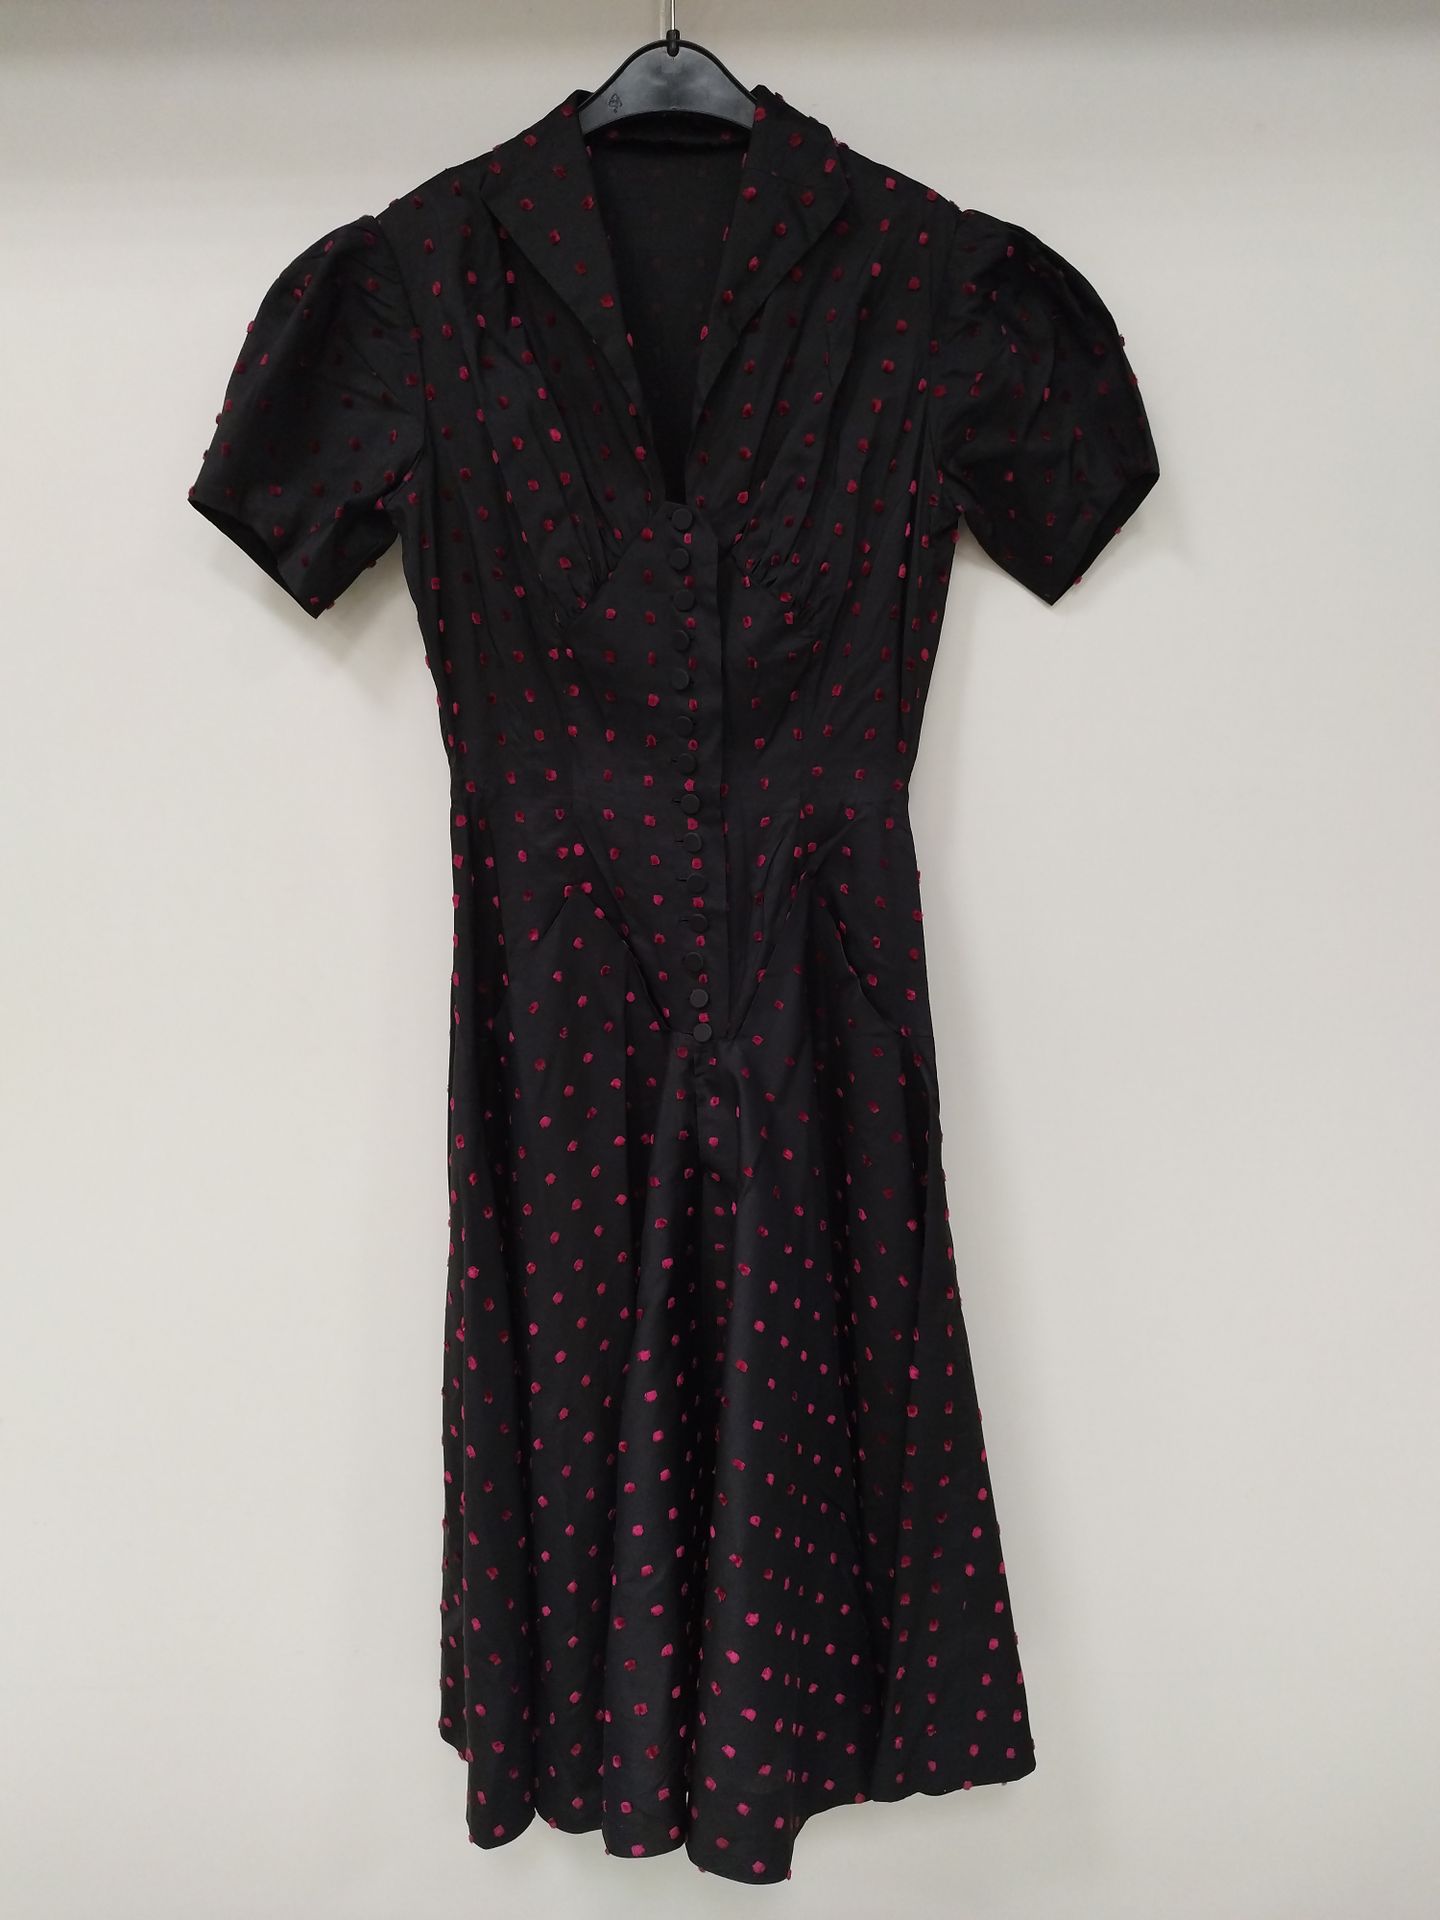 Null 翰瑞

黑色短袖粉色天鹅绒点缀中裙

50年代的灵感

尺寸36